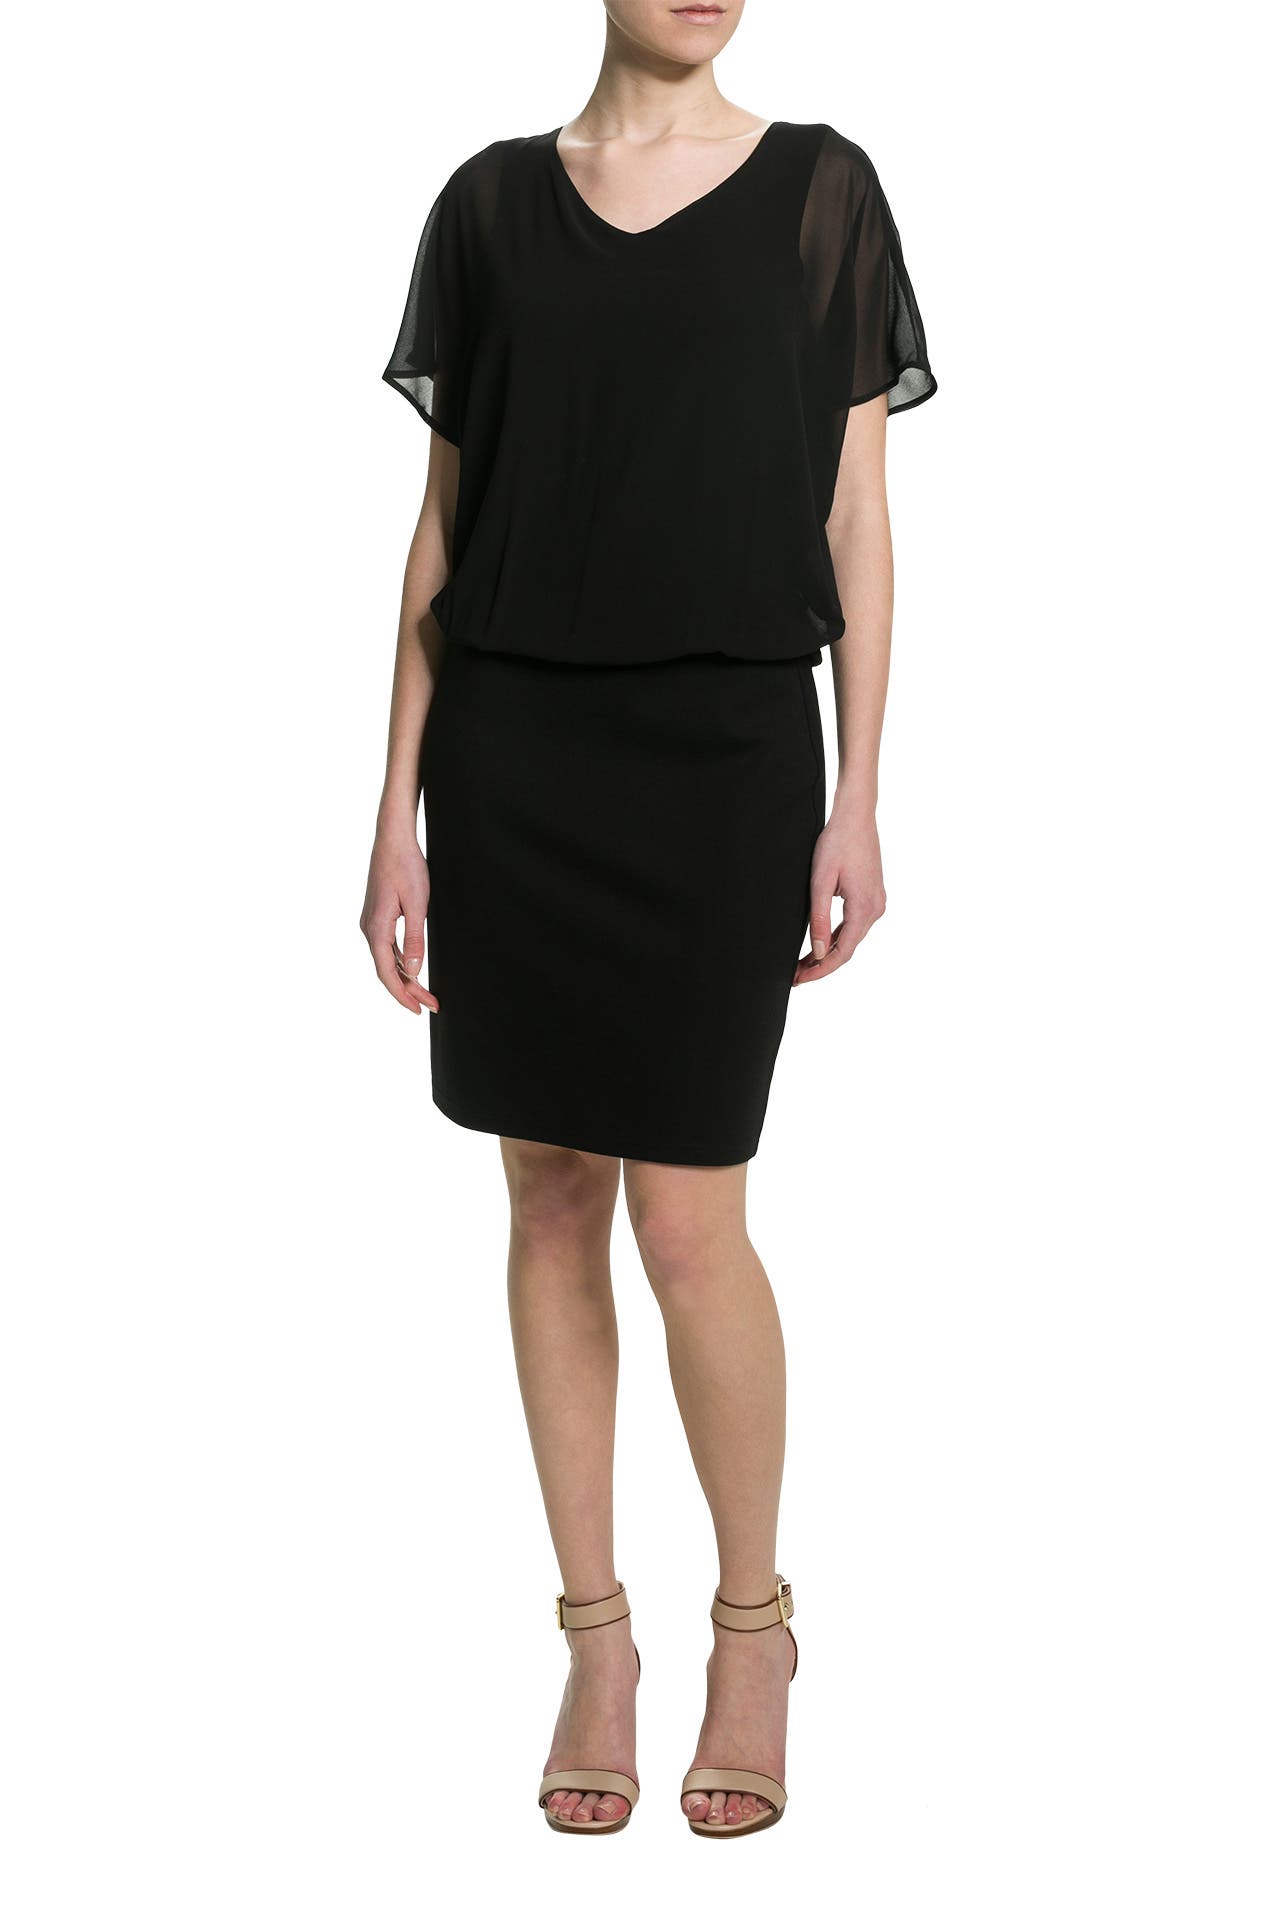 Verschrikkelijk deadline spoel Kleid schwarz - ESPRIT » günstig online kaufen | OUTLETCITY.COM